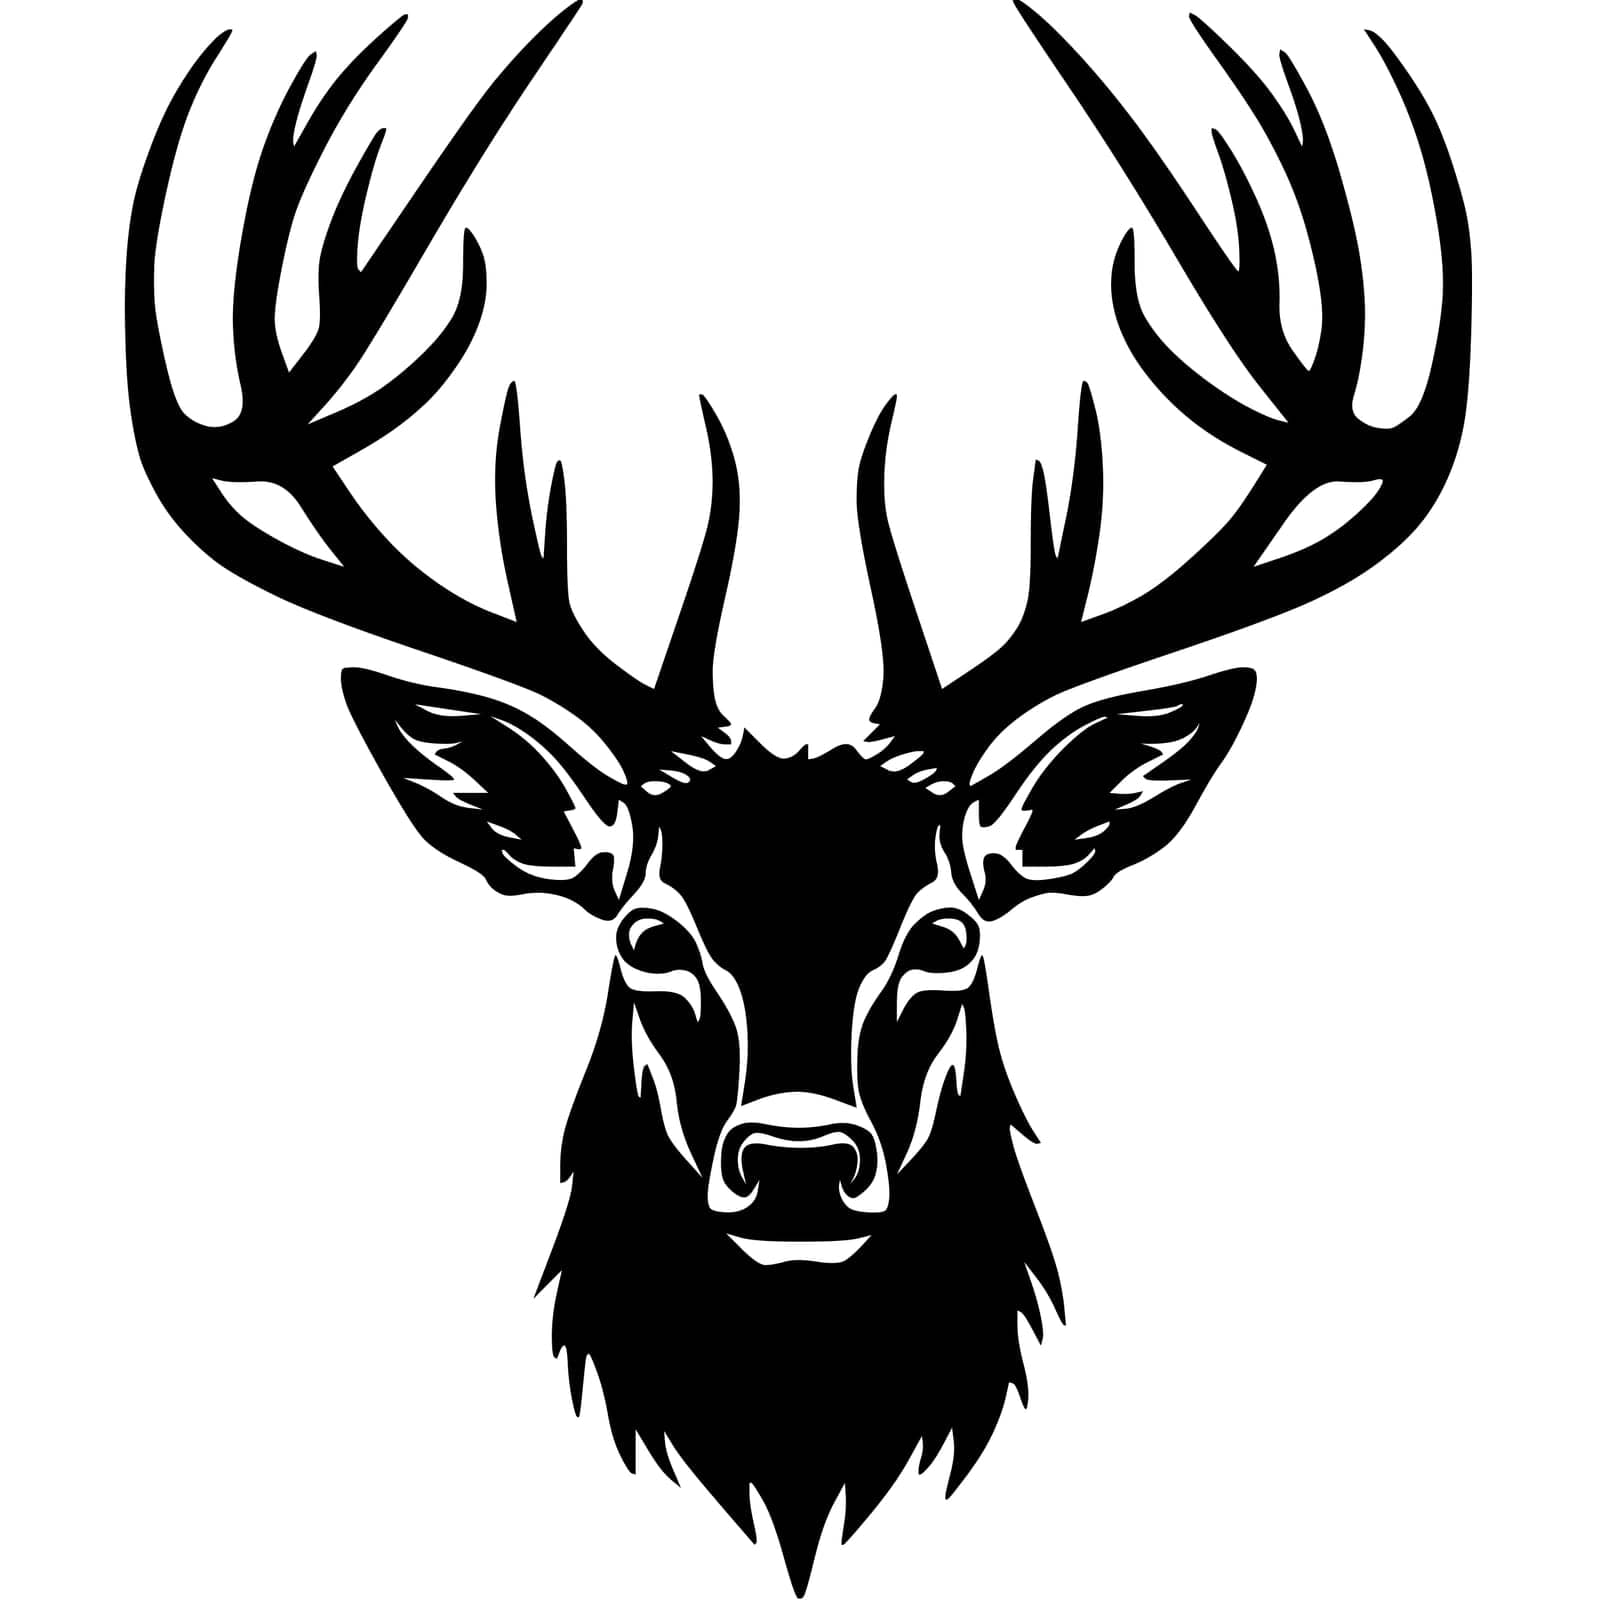 Deer Head Silhouette Hand Drawn Vector Illustration. Elk Symbol Graphic Element. Vector illustration